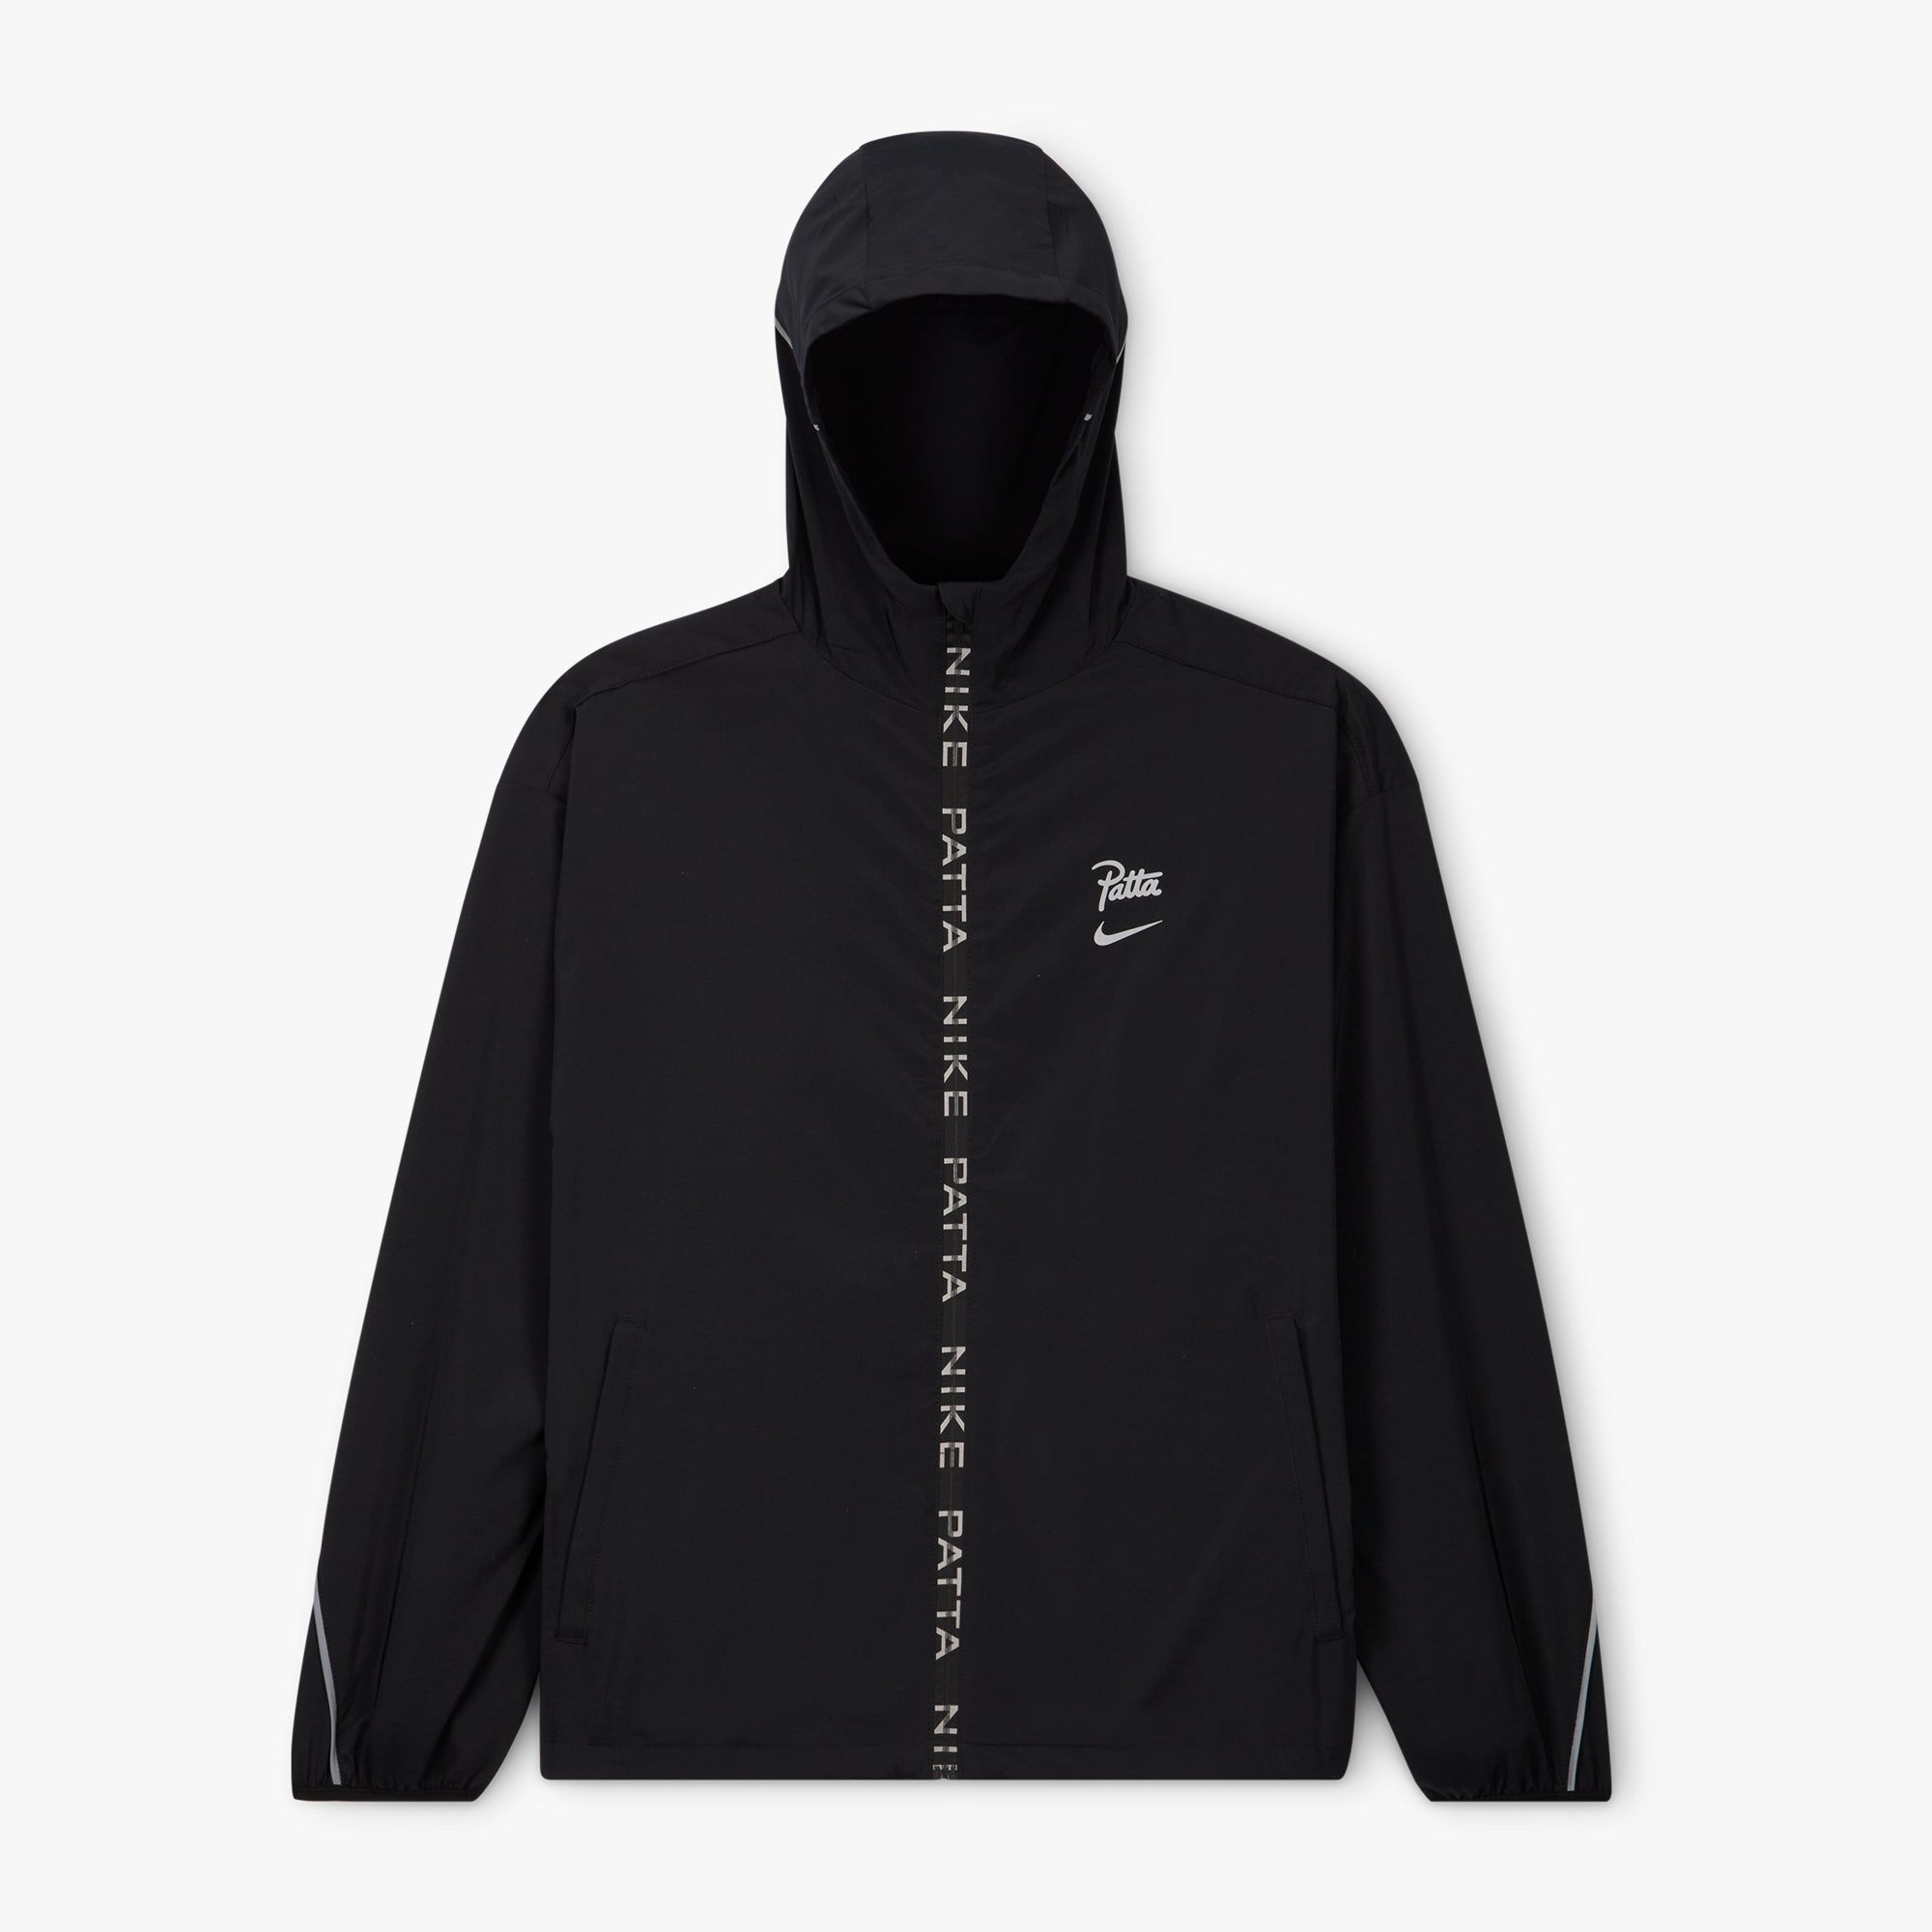 Nike x Patta Full Zip Jacket / Black 1